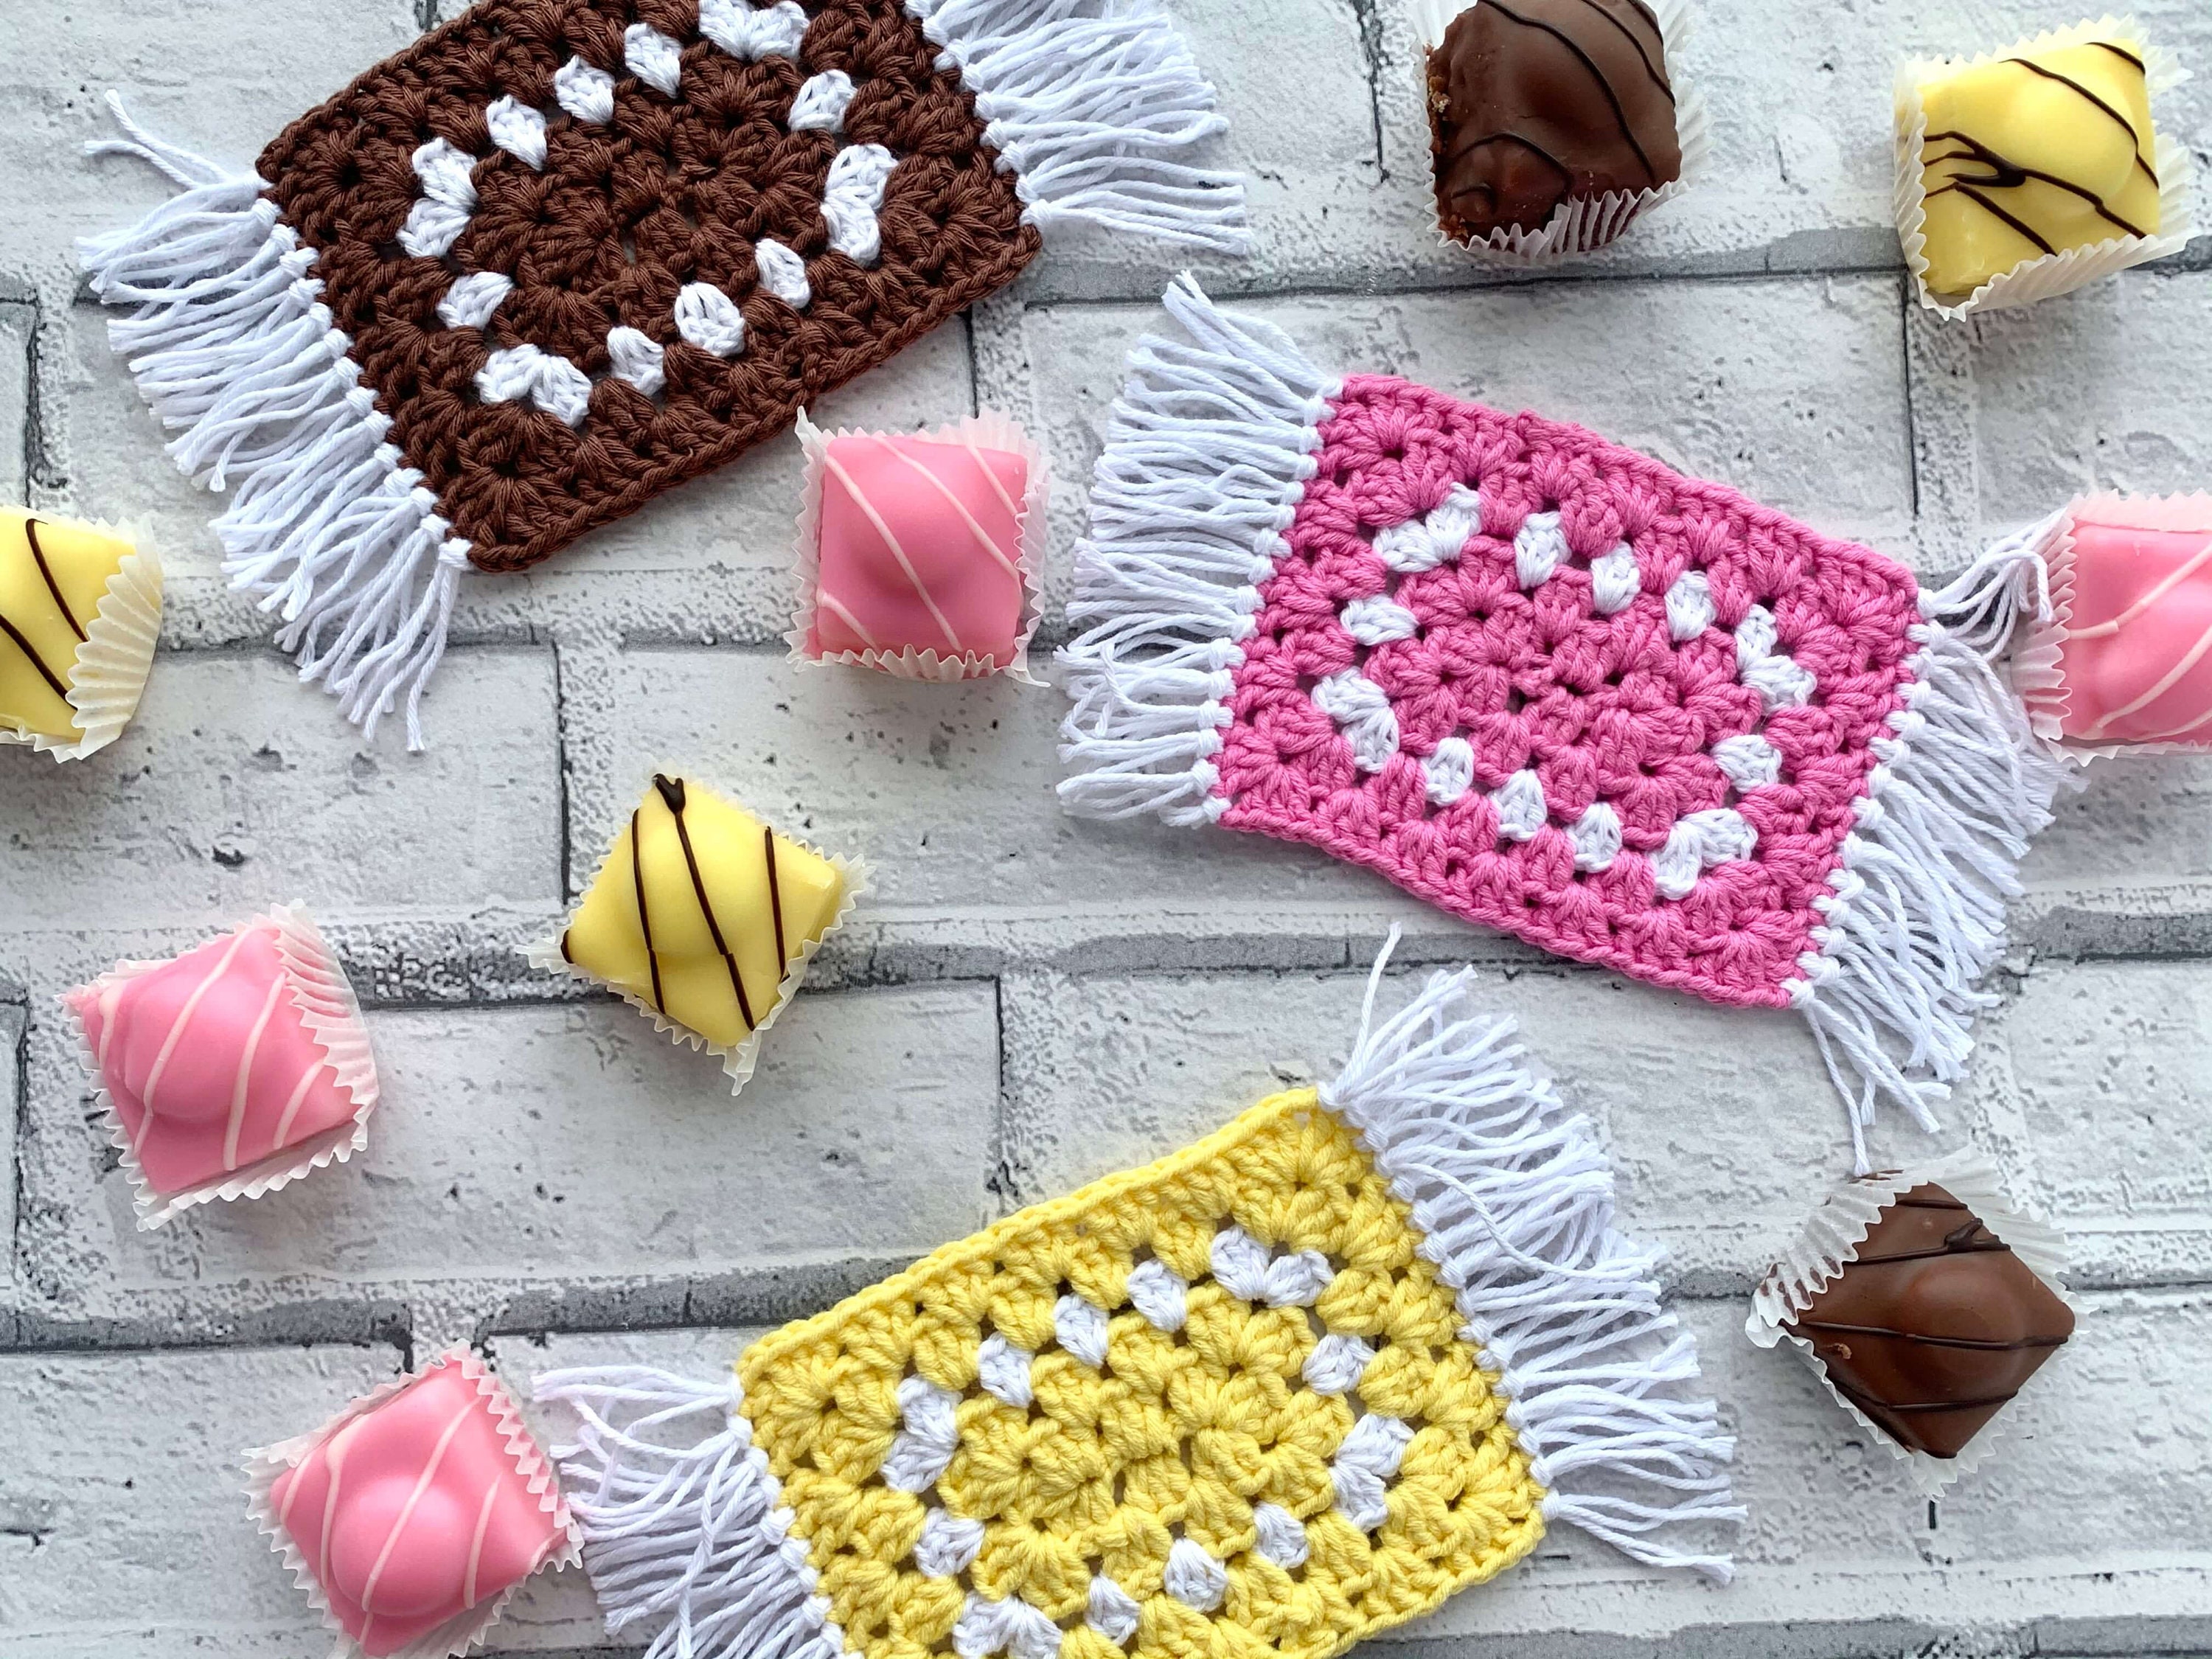 PaintBox Cotton DK Yarn Review - Cute & Cozy Crochet